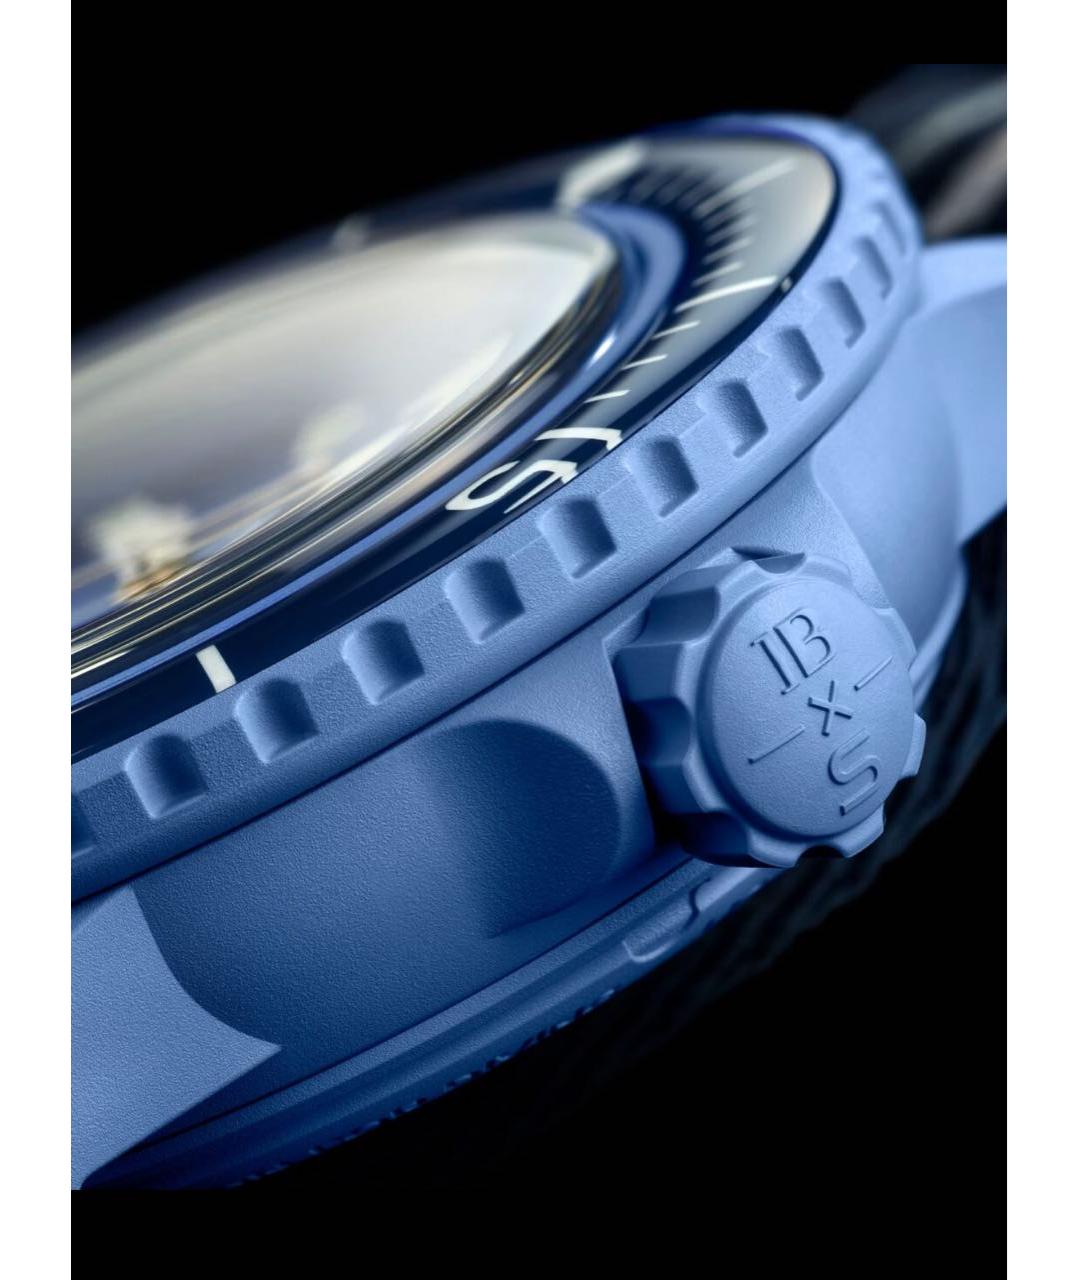 Blancpain Синие керамические часы, фото 6